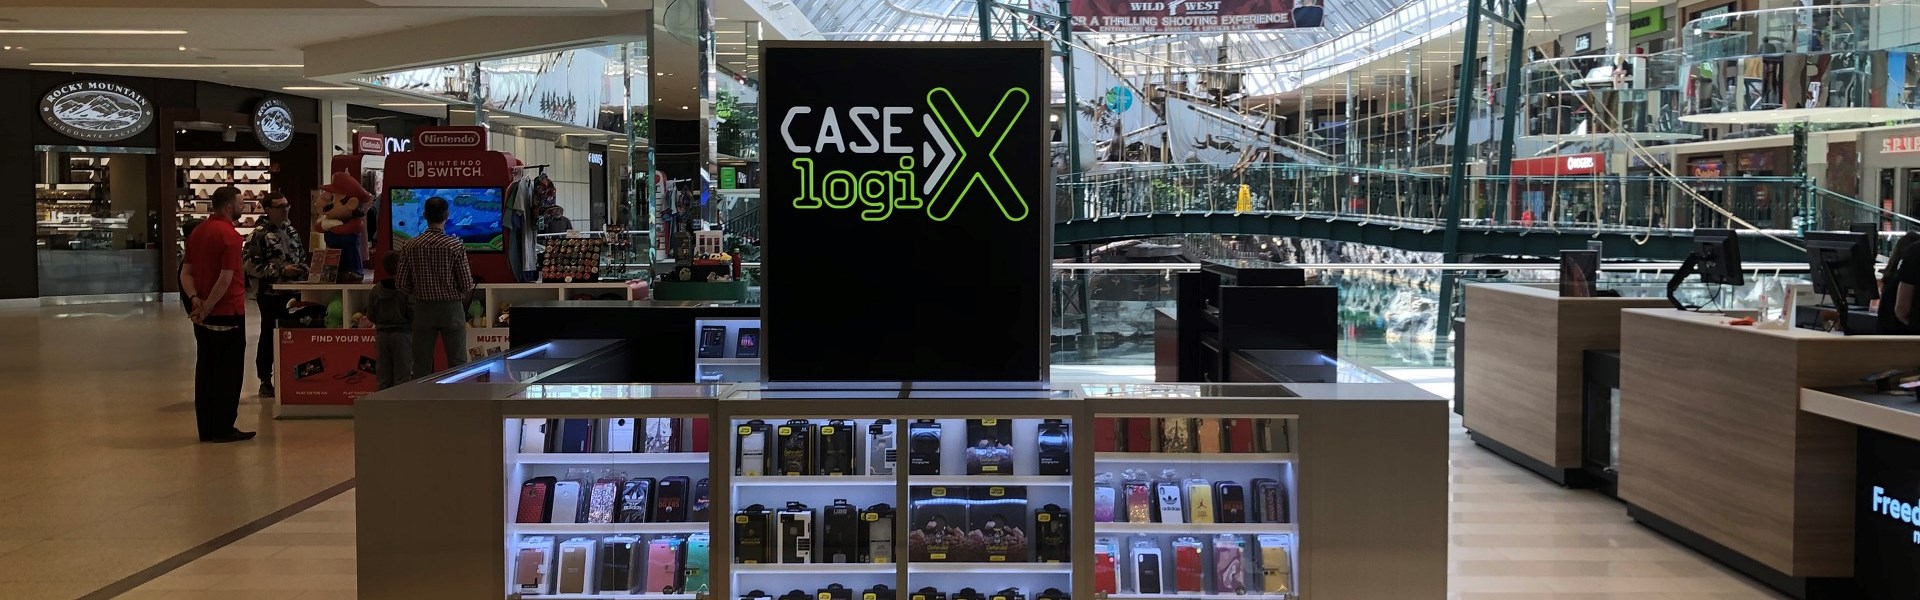 CaseLogix - Phase III